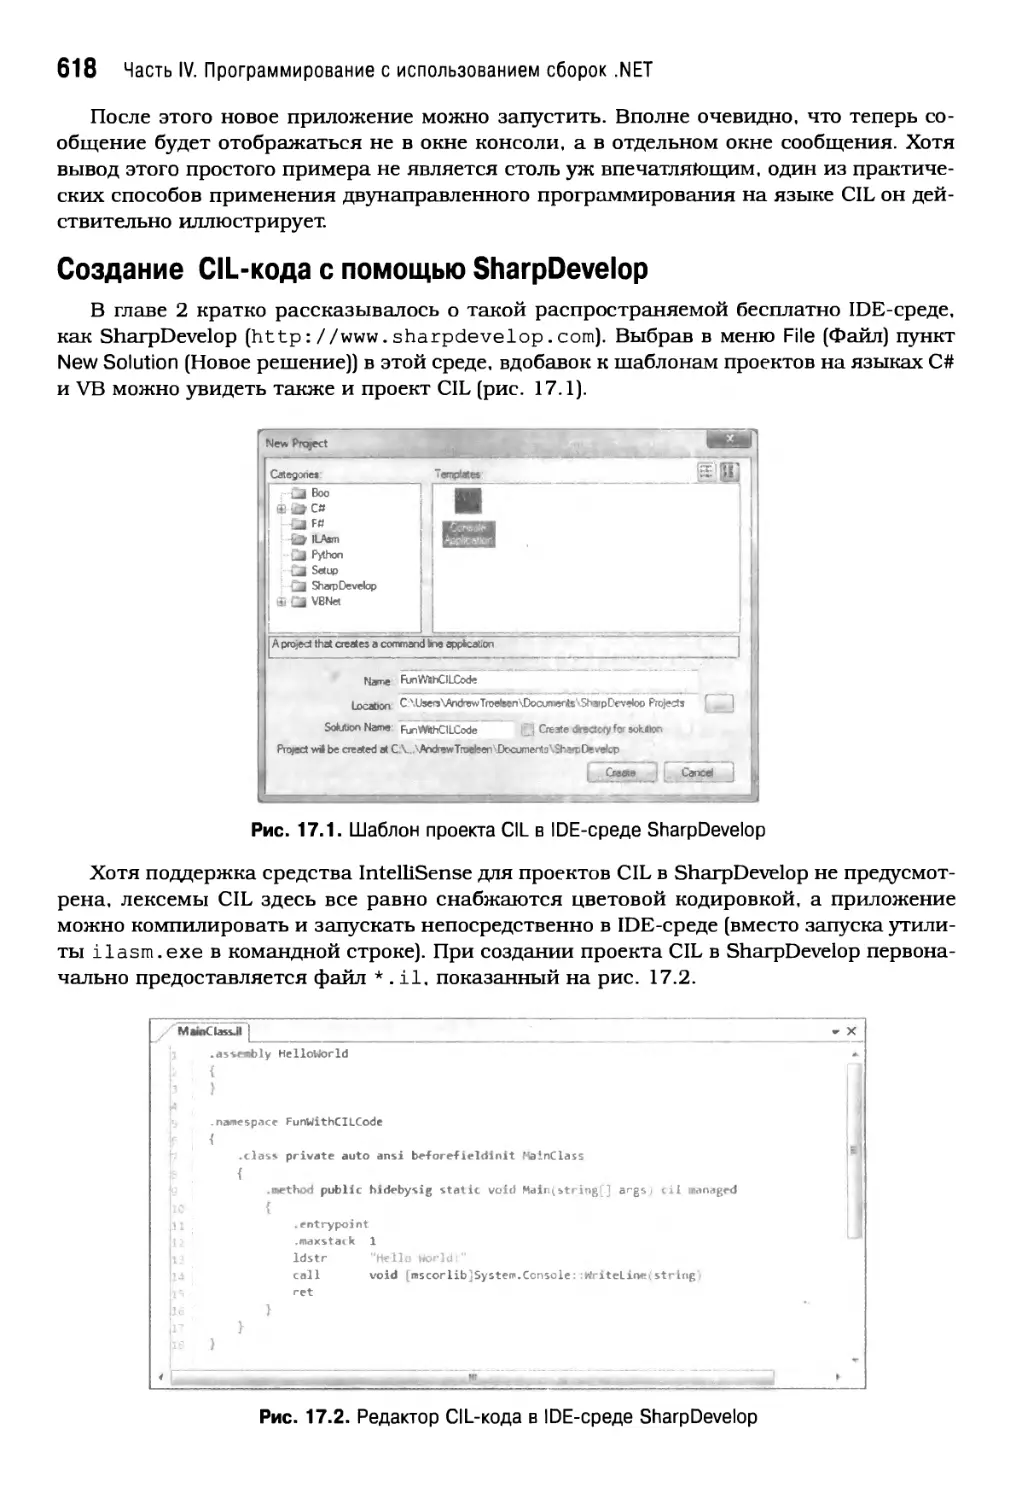 Создание CIL-кода с помощью SharpDevelop